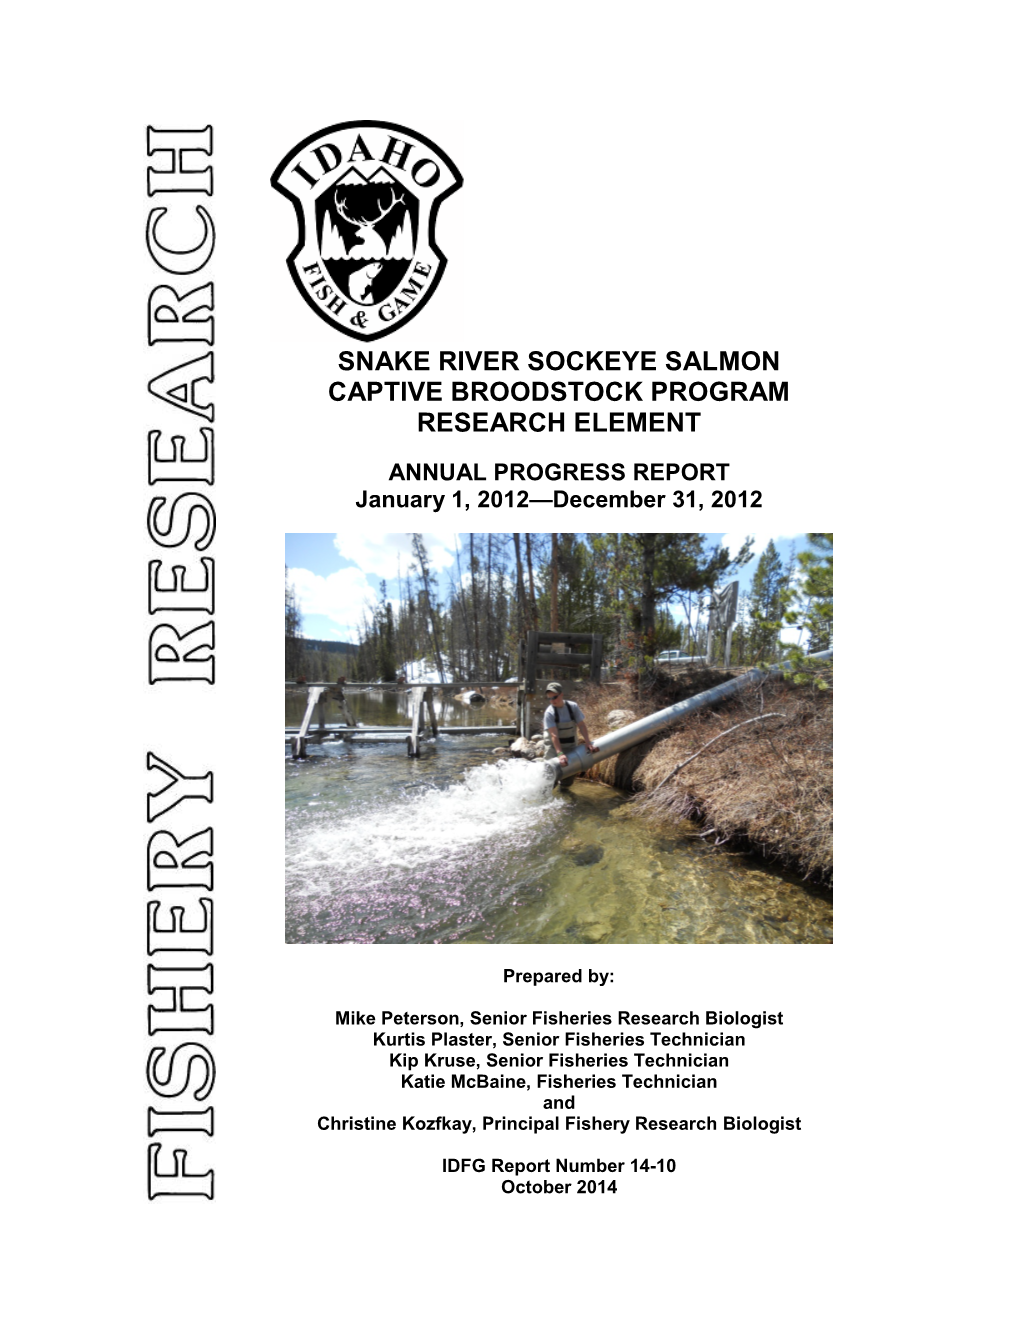 Snake River Sockeye Salmon Captive Broodstock Program Research Element